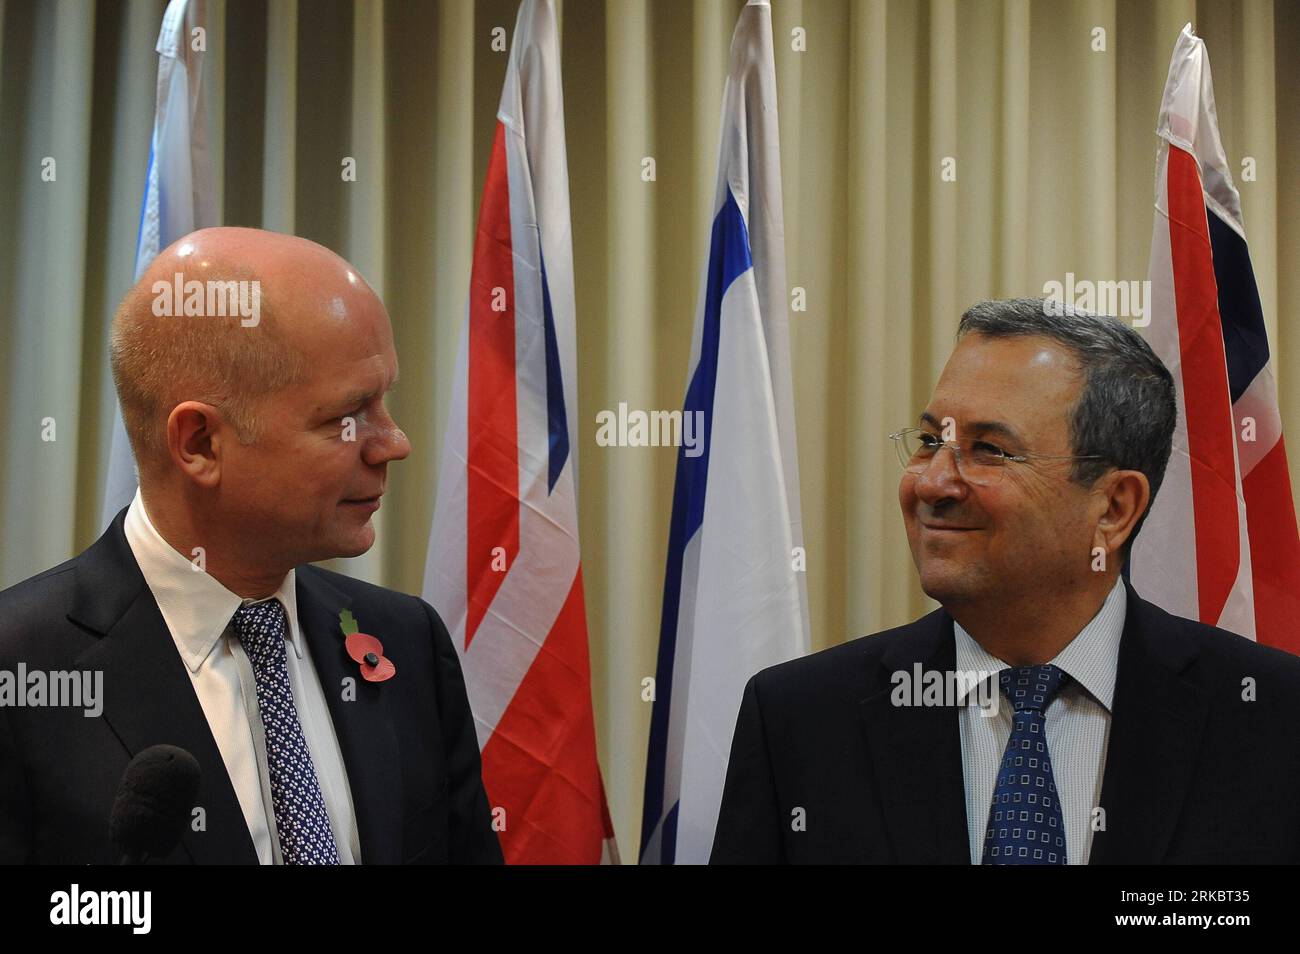 Bildnummer: 54606564  Datum: 04.11.2010  Copyright: imago/Xinhua (101104) -- TEL AVIV, Nov.4, 2010 (Xinhua) -- Israeli Defense Minister Ehud Barak (R) meets with British Foreign Secretary William Hague in Tel Aviv, Israel, on Nov. 4, 2010.(Xinhua/POOL/Ahikam Seri)(zl) ISRAEL-BRITAIN-MEETING PUBLICATIONxNOTxINxCHN People Politik kbdig xdp 2010 quer premiumd     Bildnummer 54606564 Date 04 11 2010 Copyright Imago XINHUA  Tel Aviv Nov 4 2010 XINHUA Israeli Defense Ministers Ehud Barak r Meets With British Foreign Secretary William Hague in Tel Aviv Israel ON Nov 4 2010 XINHUA Pool Ahikam Seri ZL Stock Photo